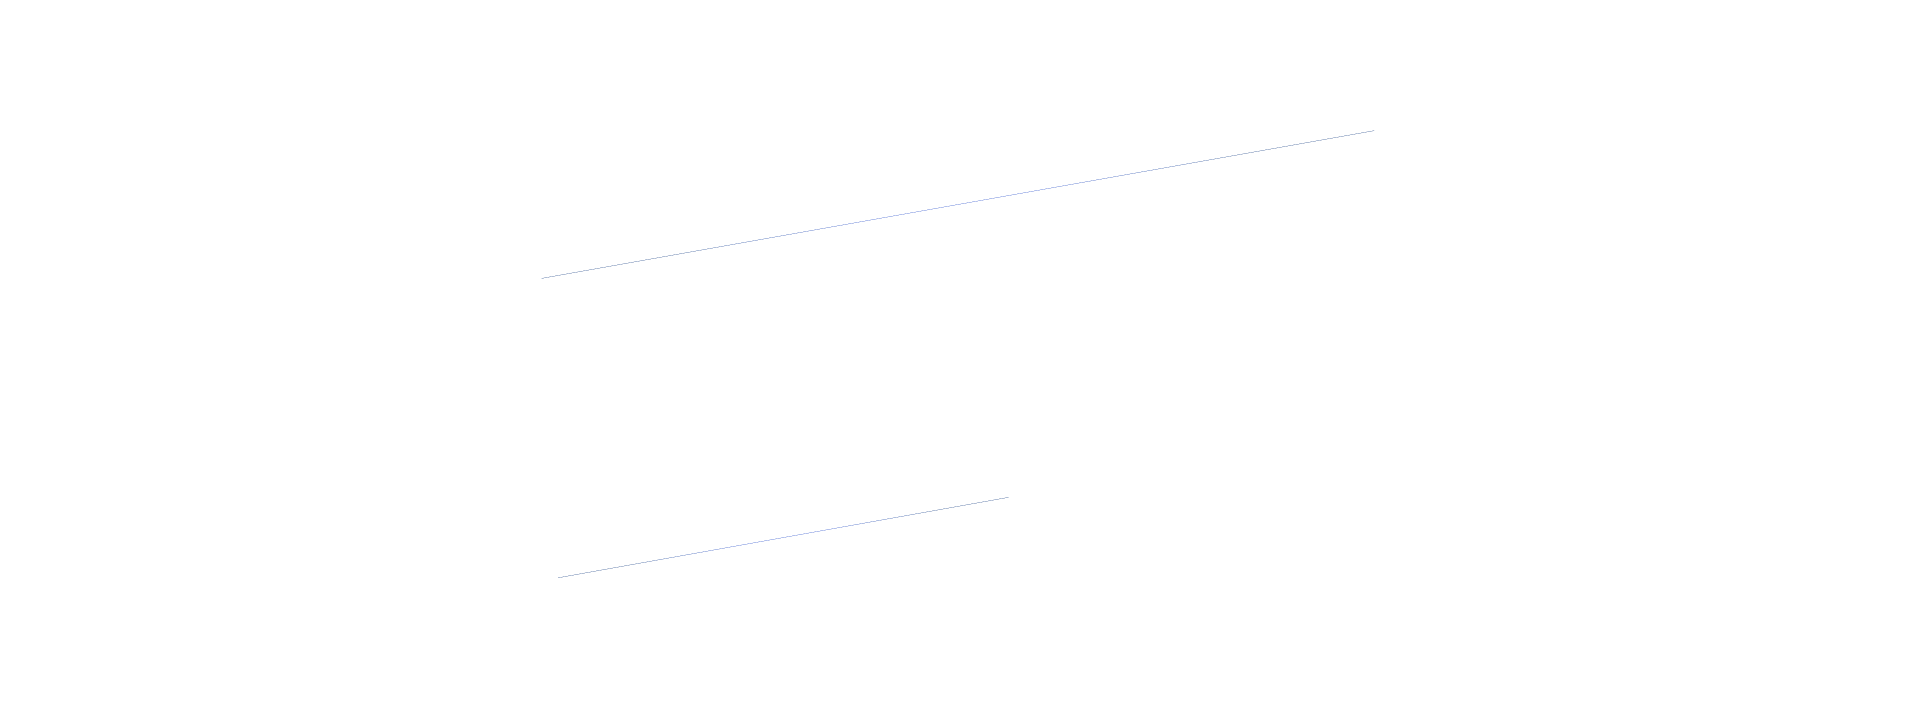 VIRTUAL-1